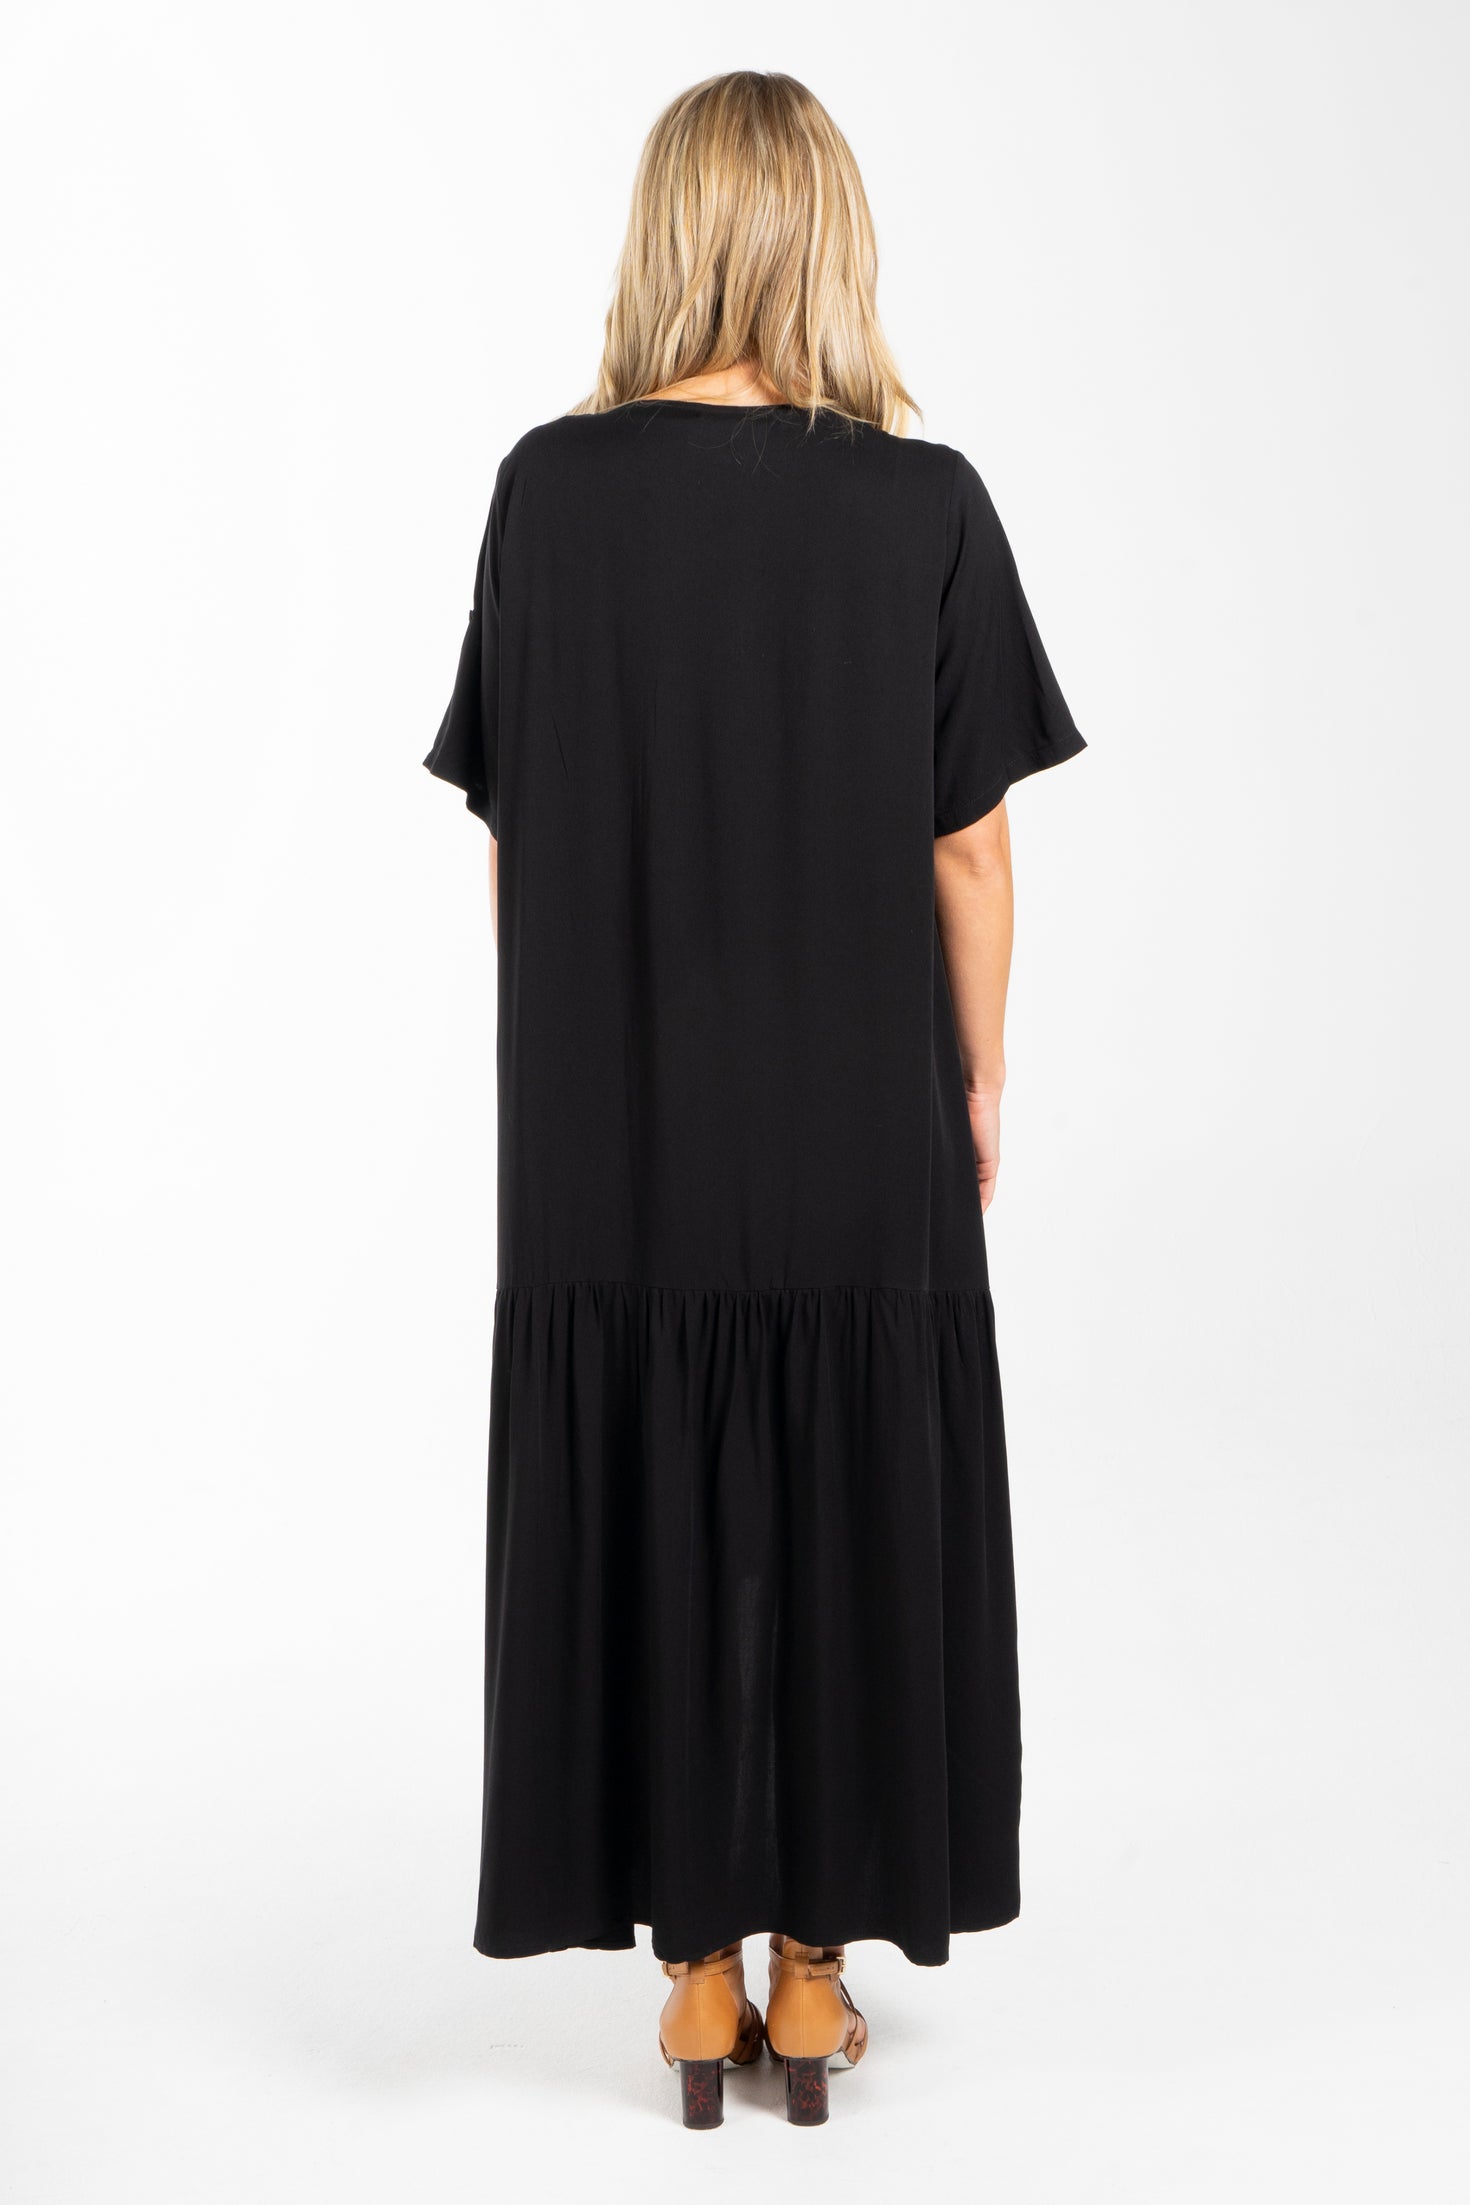 Peak Maxi Dress in Black | Australian Made | PQ Collection